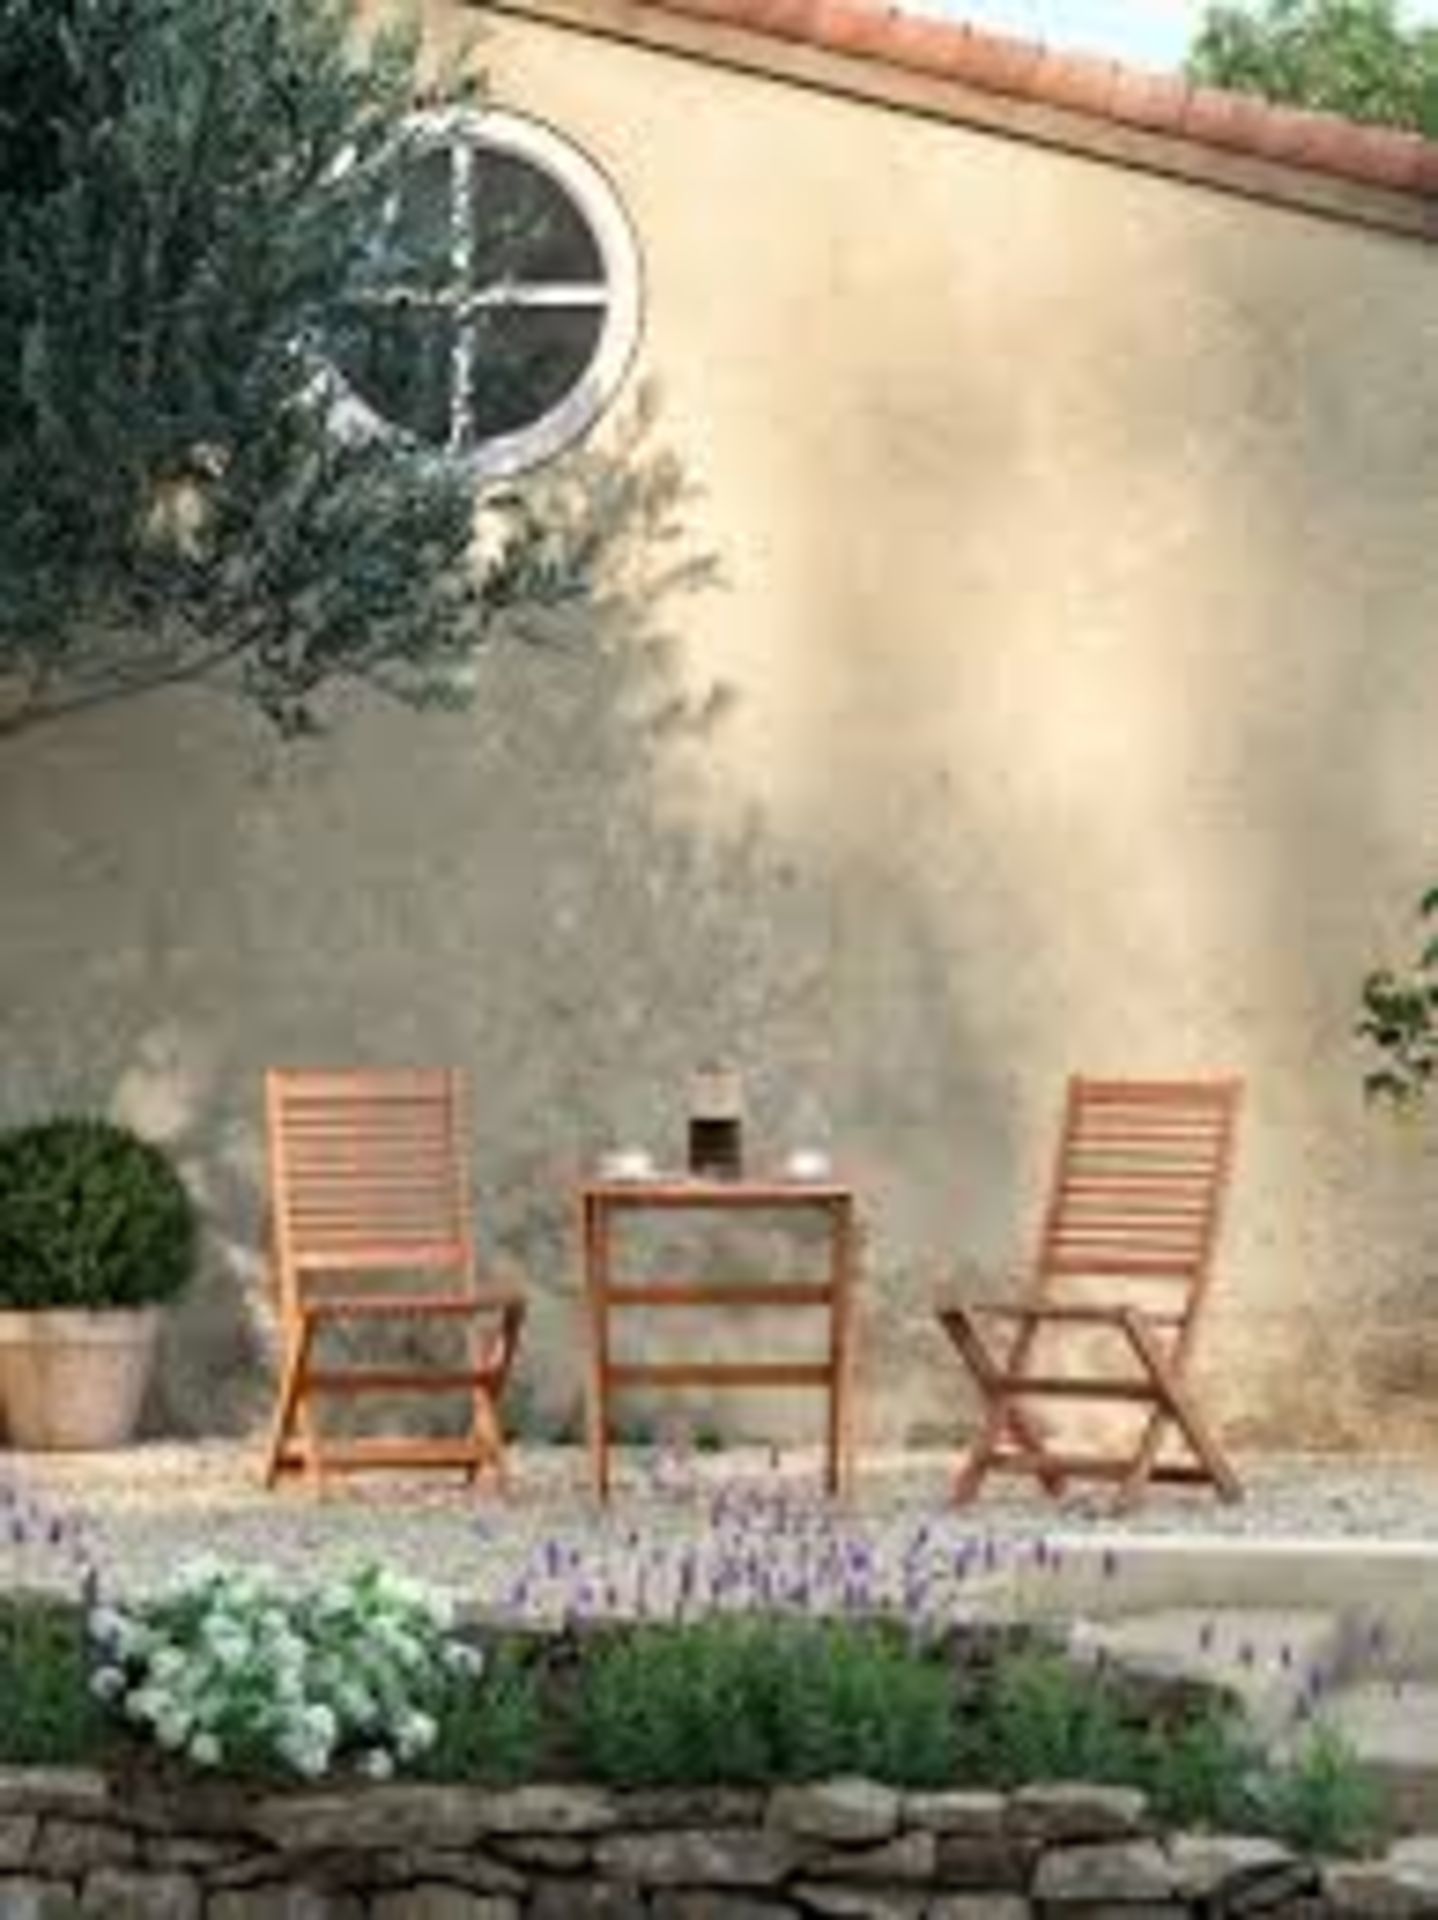 BRAND NEW John Lewis & Partners Venice 2-Seat Folding Garden Bistro Set, FSC-Certified (Eucalyptus - Image 4 of 4